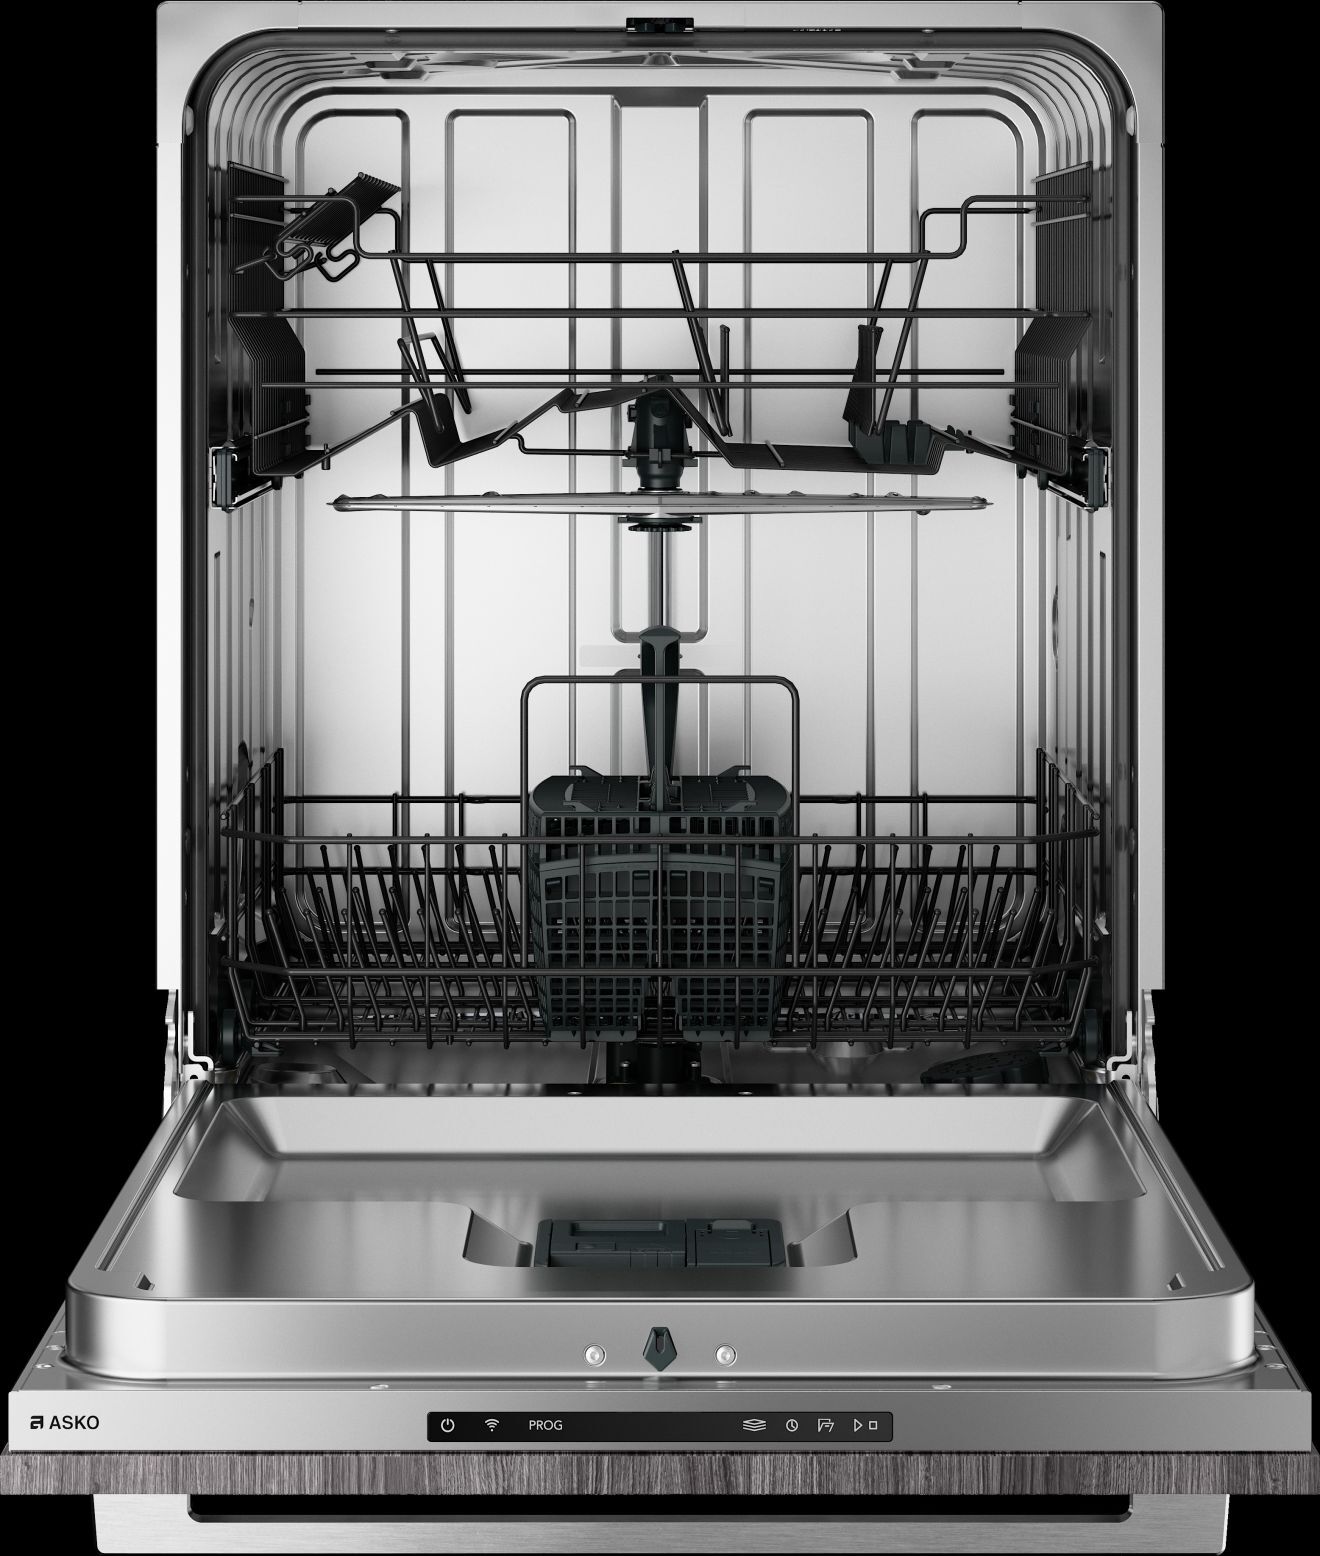 ASKO Dishwasher DFI533A (Grey metallic)